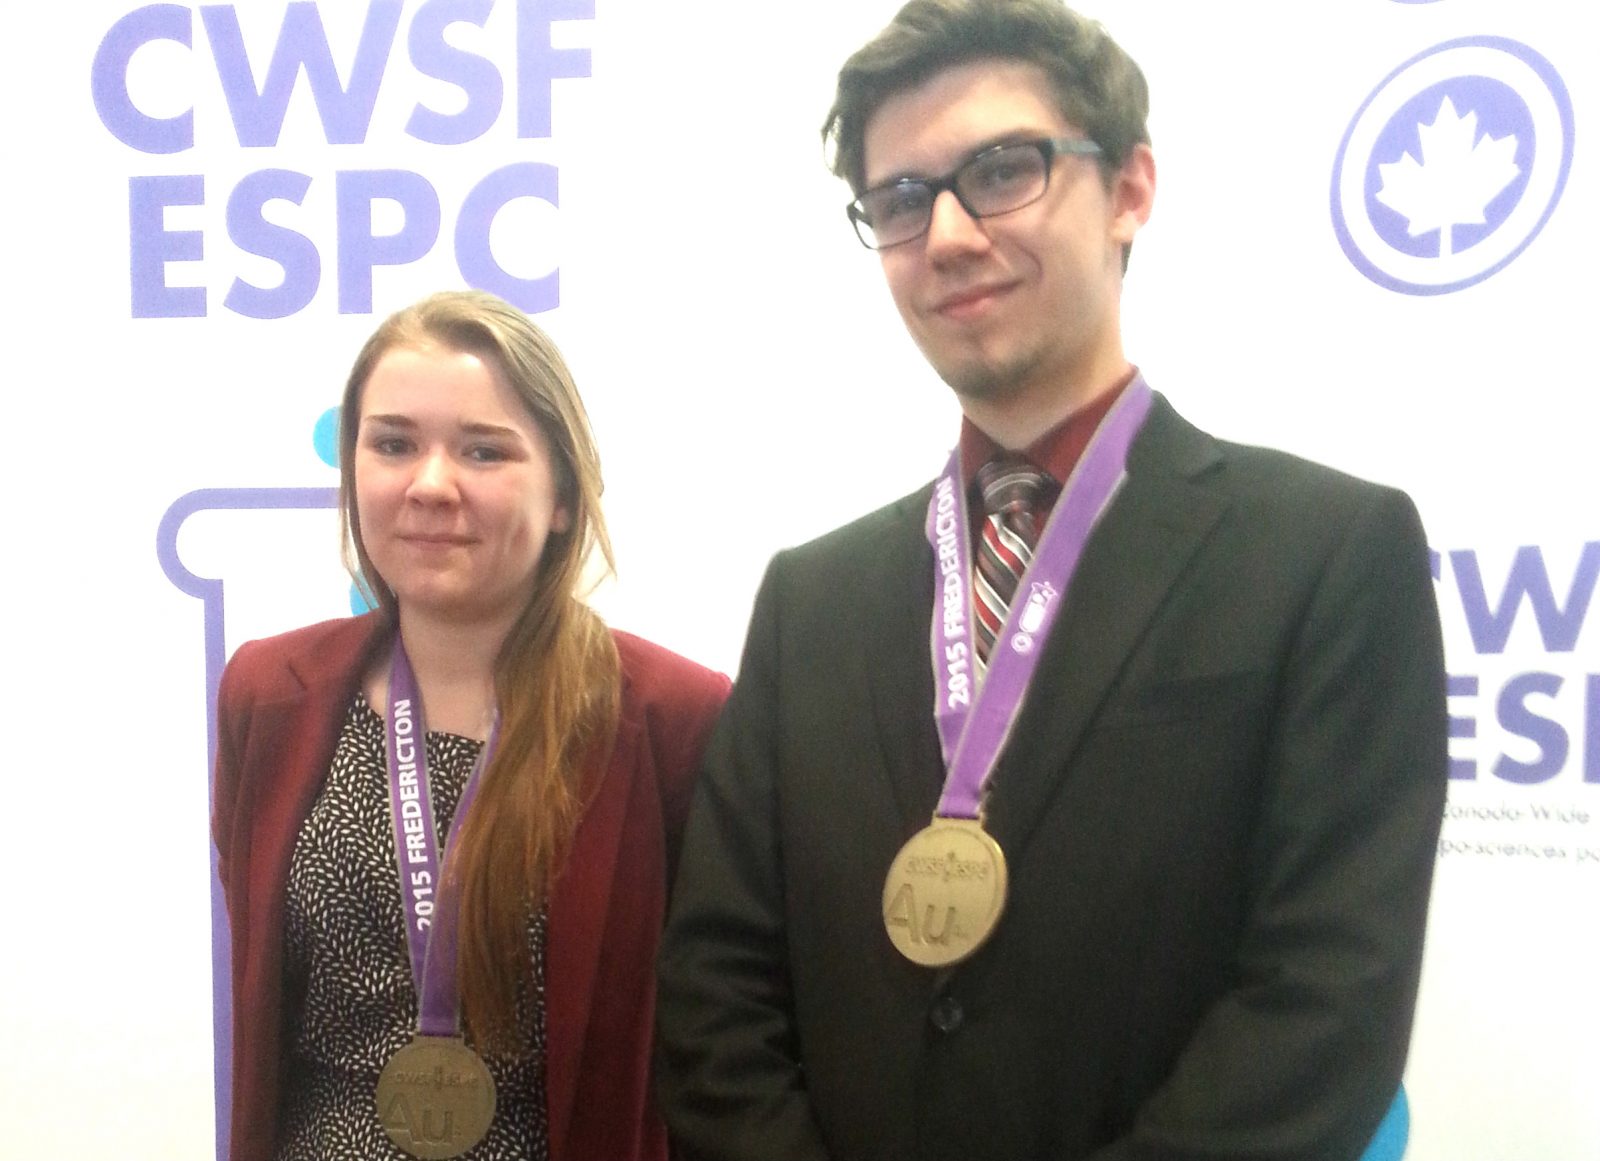 GOLDEN MOMENT: Cornwall teens grab top honours at national science fair